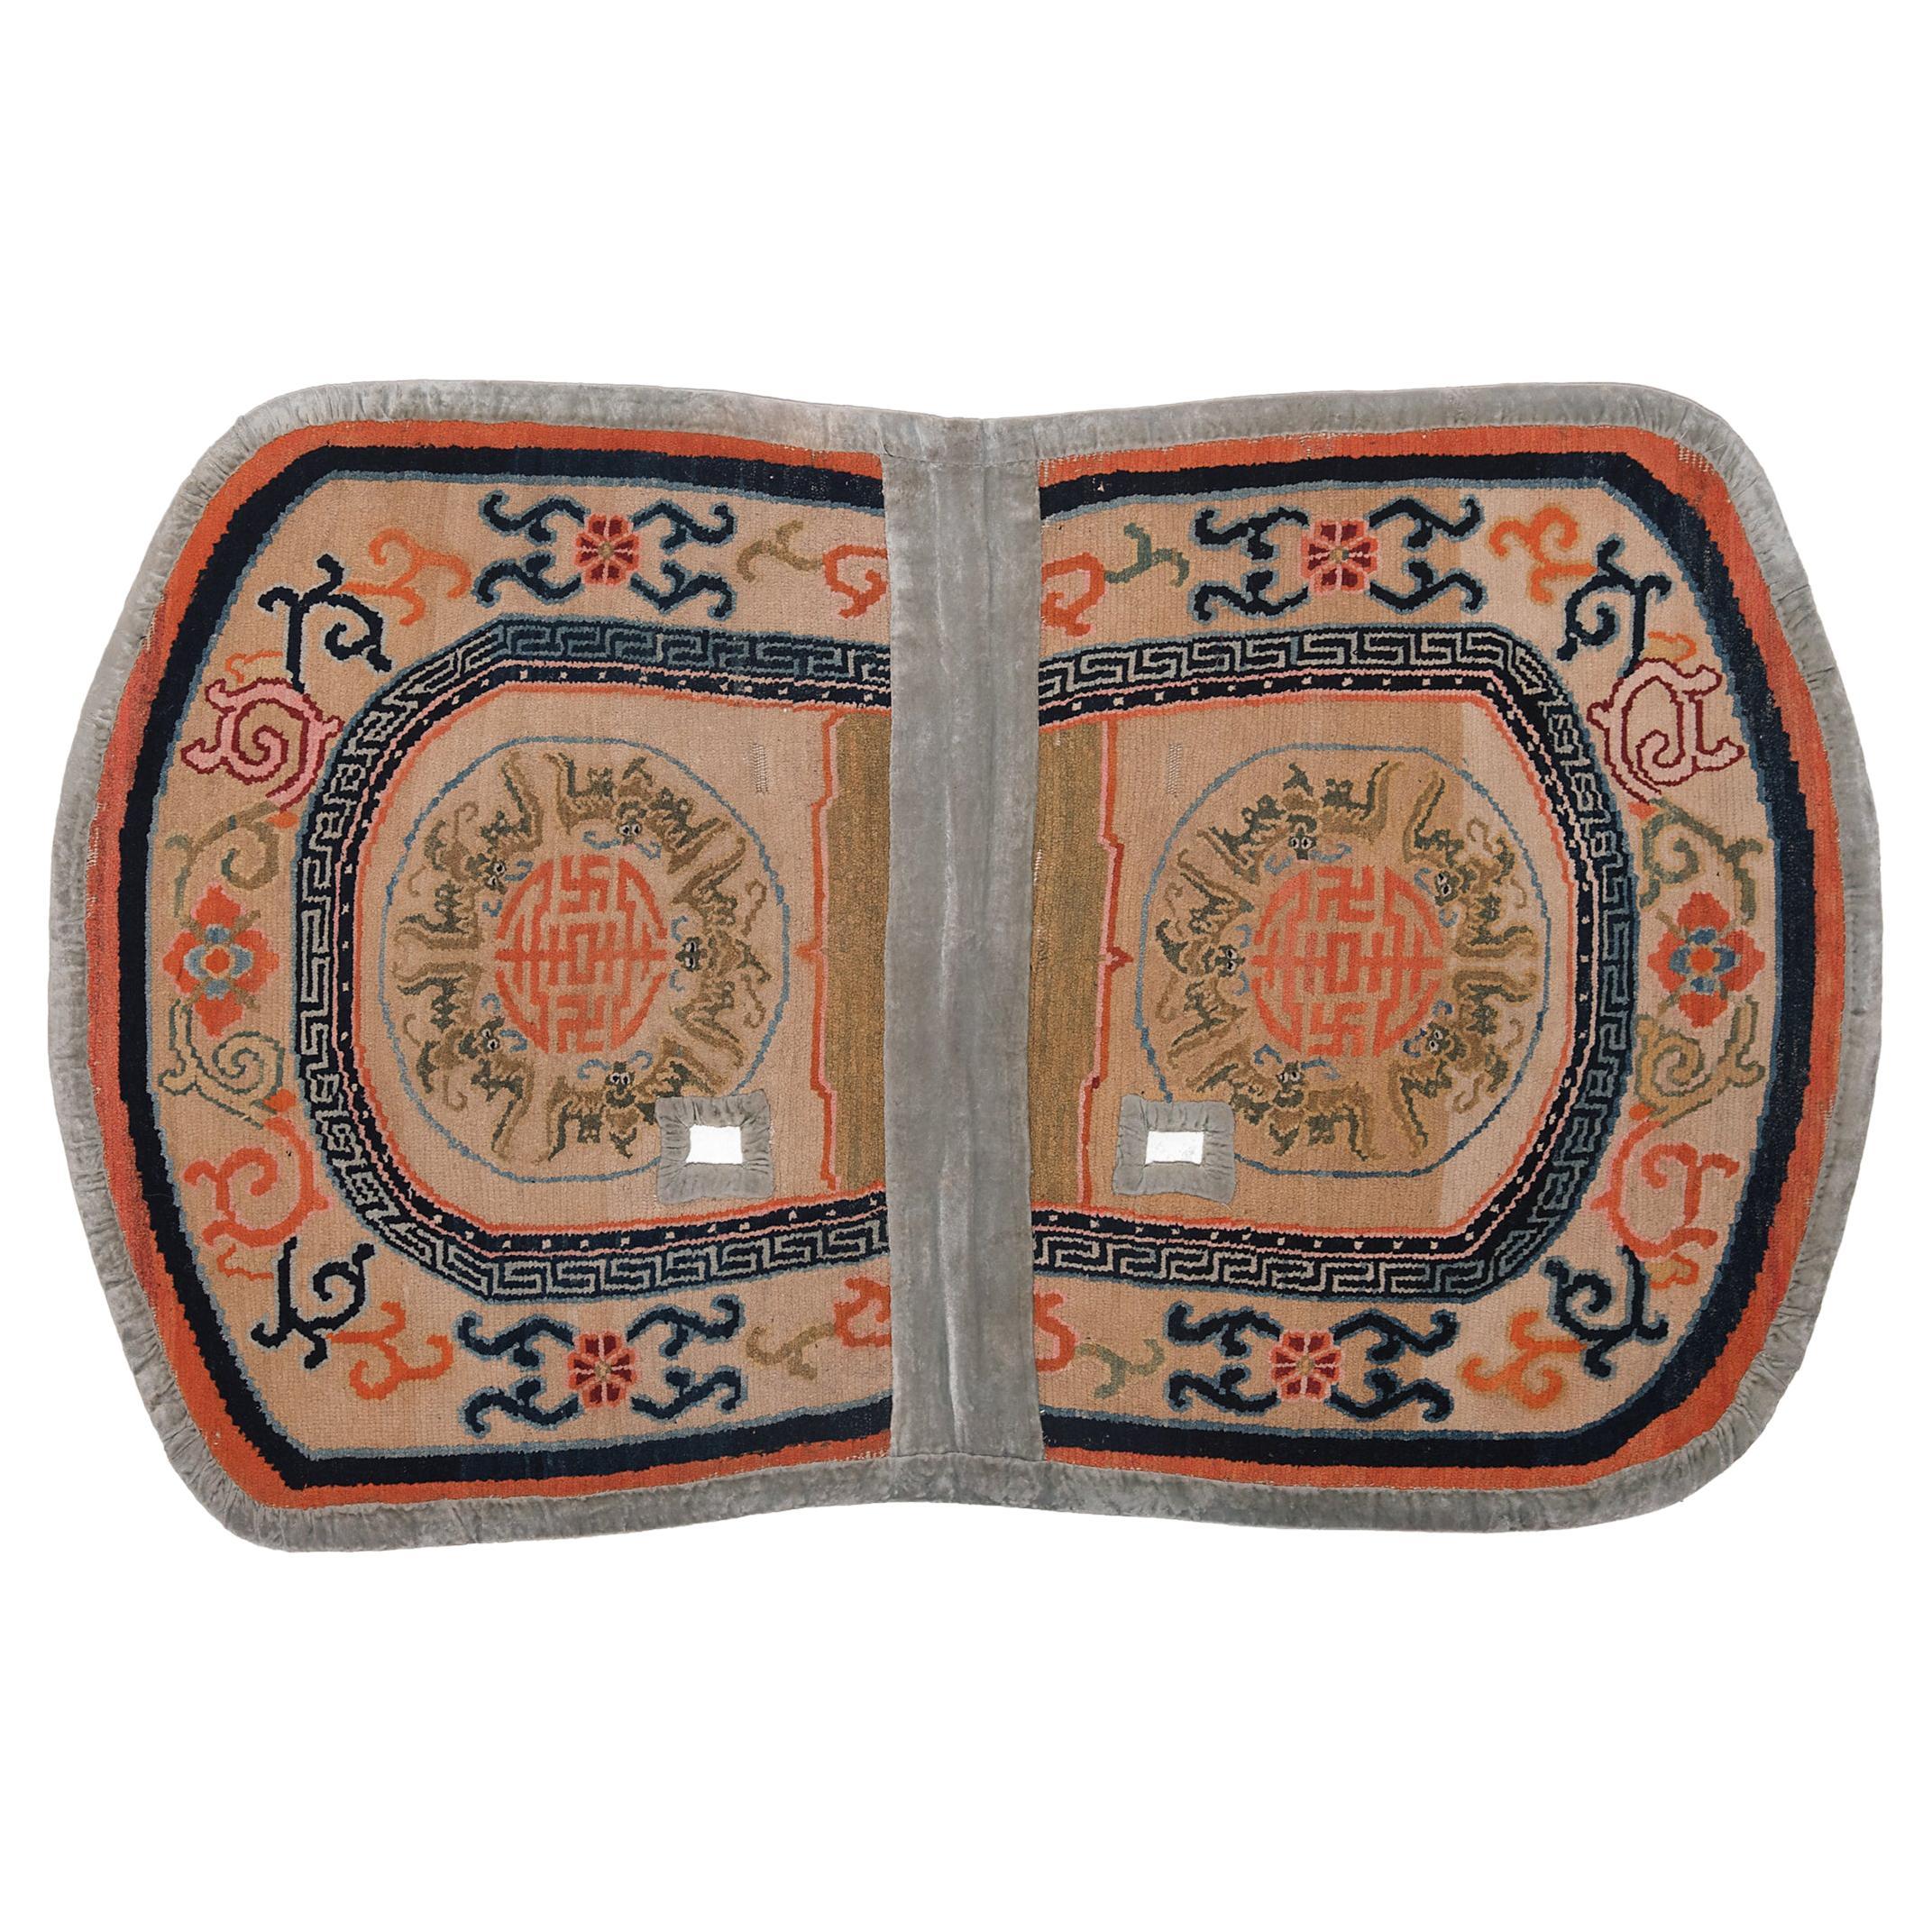 Tibetan Saddle Carpet with Five Blessing Medallions, c. 1900